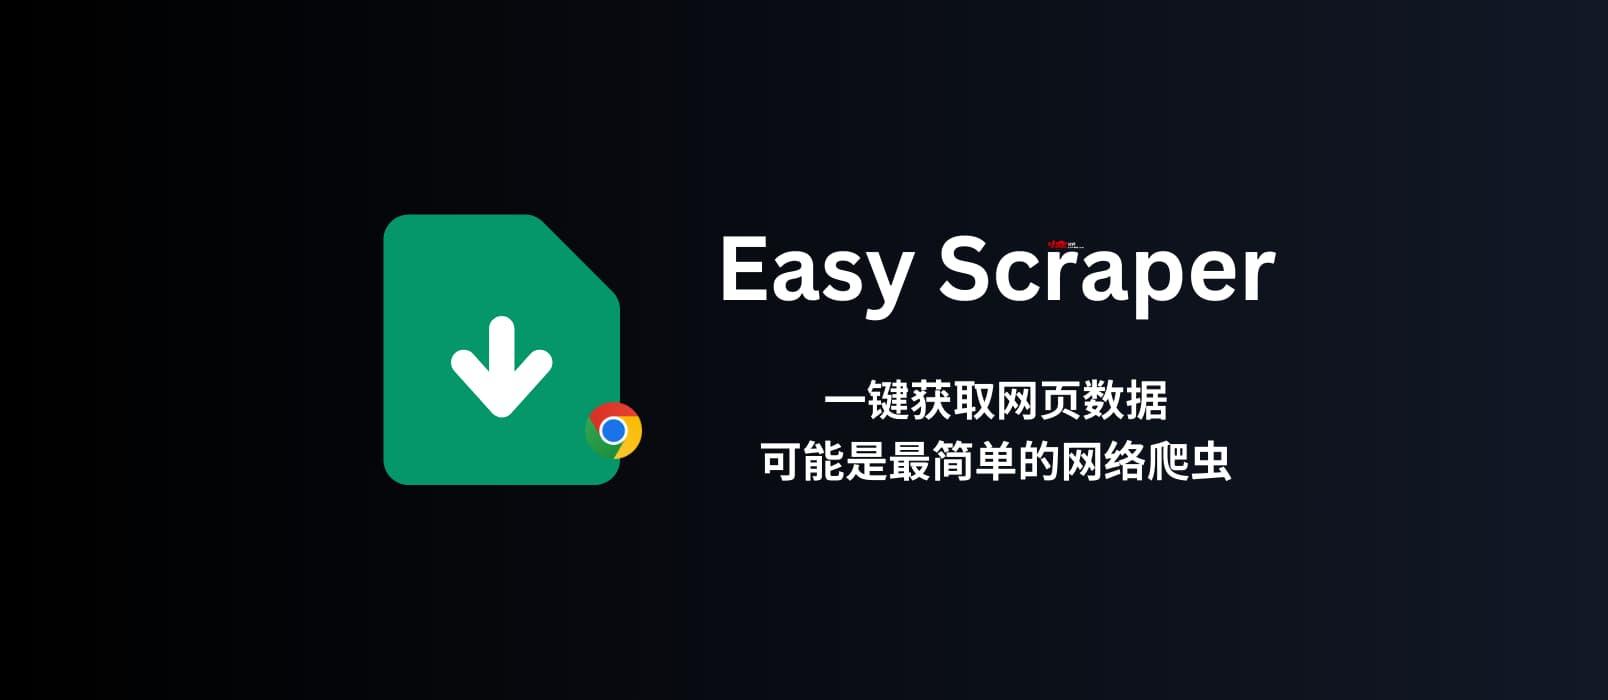 Easy Scraper - No programming required, visual web scraper, one-click data extraction, possibly the simplest web scraper [Chrome] 1